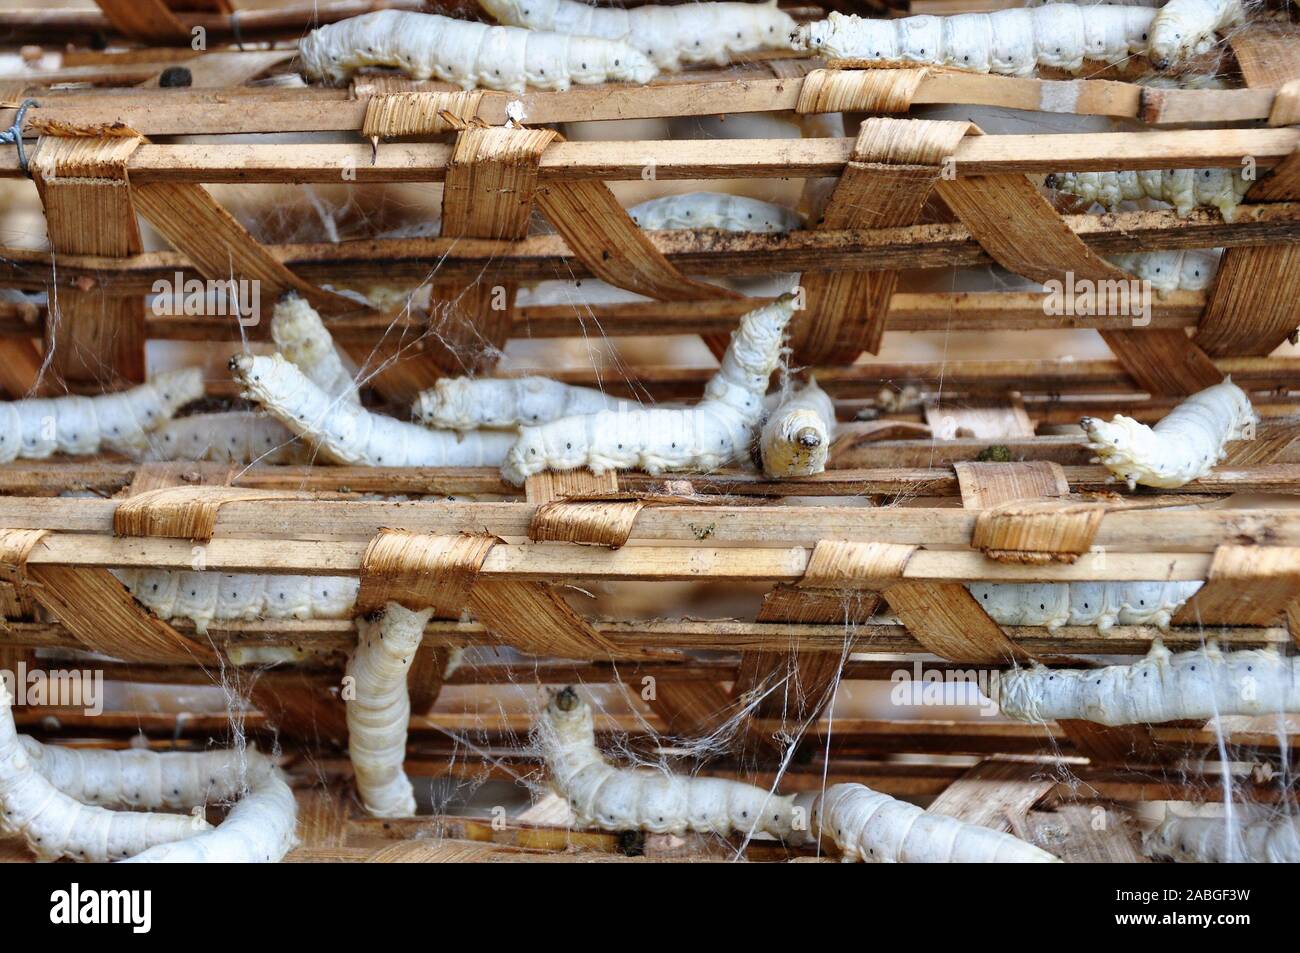 Breeding Silkwormth on a silworm farm in asia Stock Photo